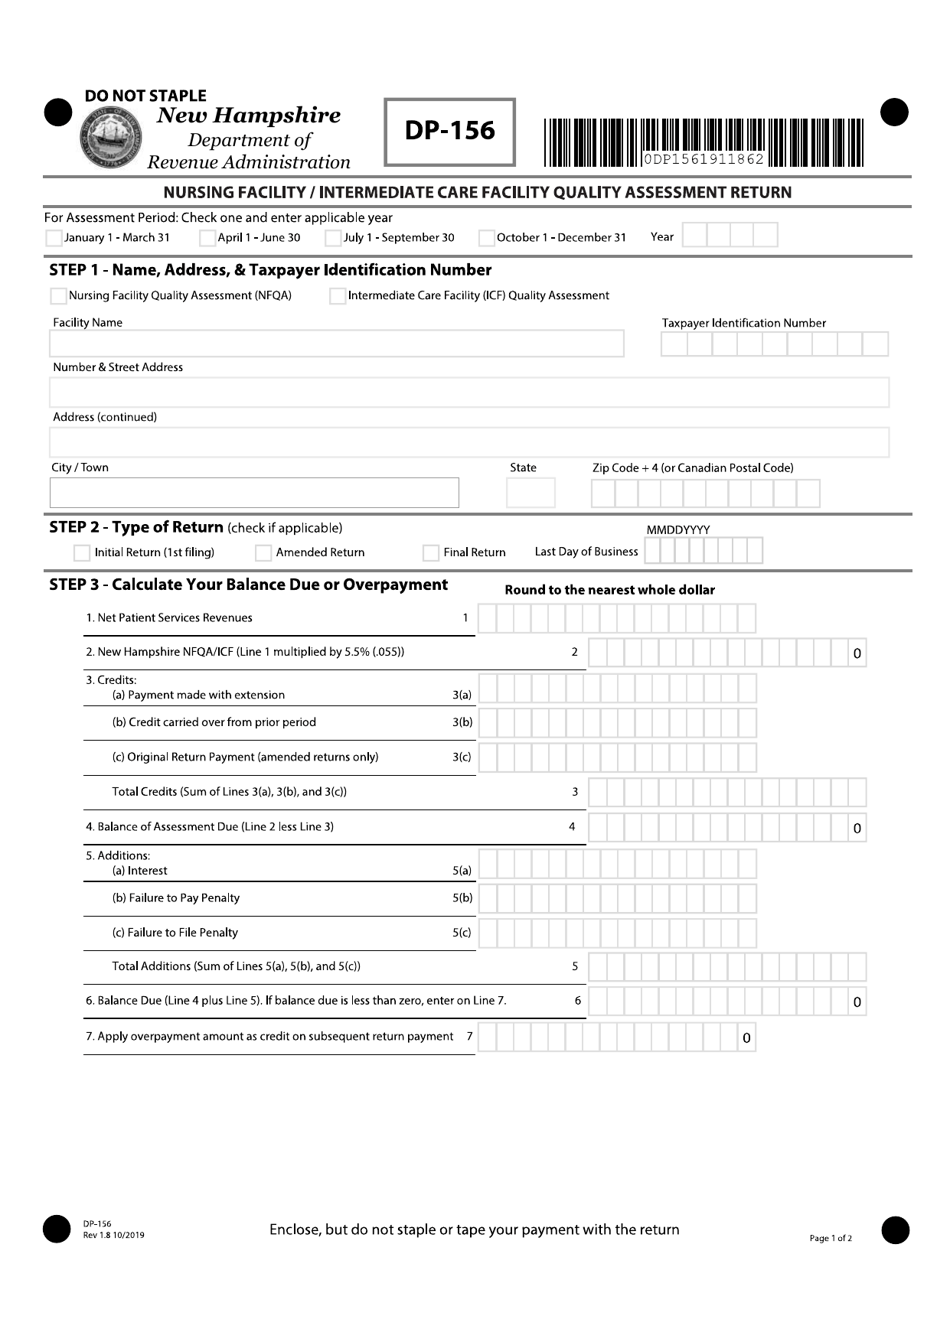 Form DP-156 Nursing Facility / Intermediate Care Facility Quality Assessment Return - New Hampshire, Page 1